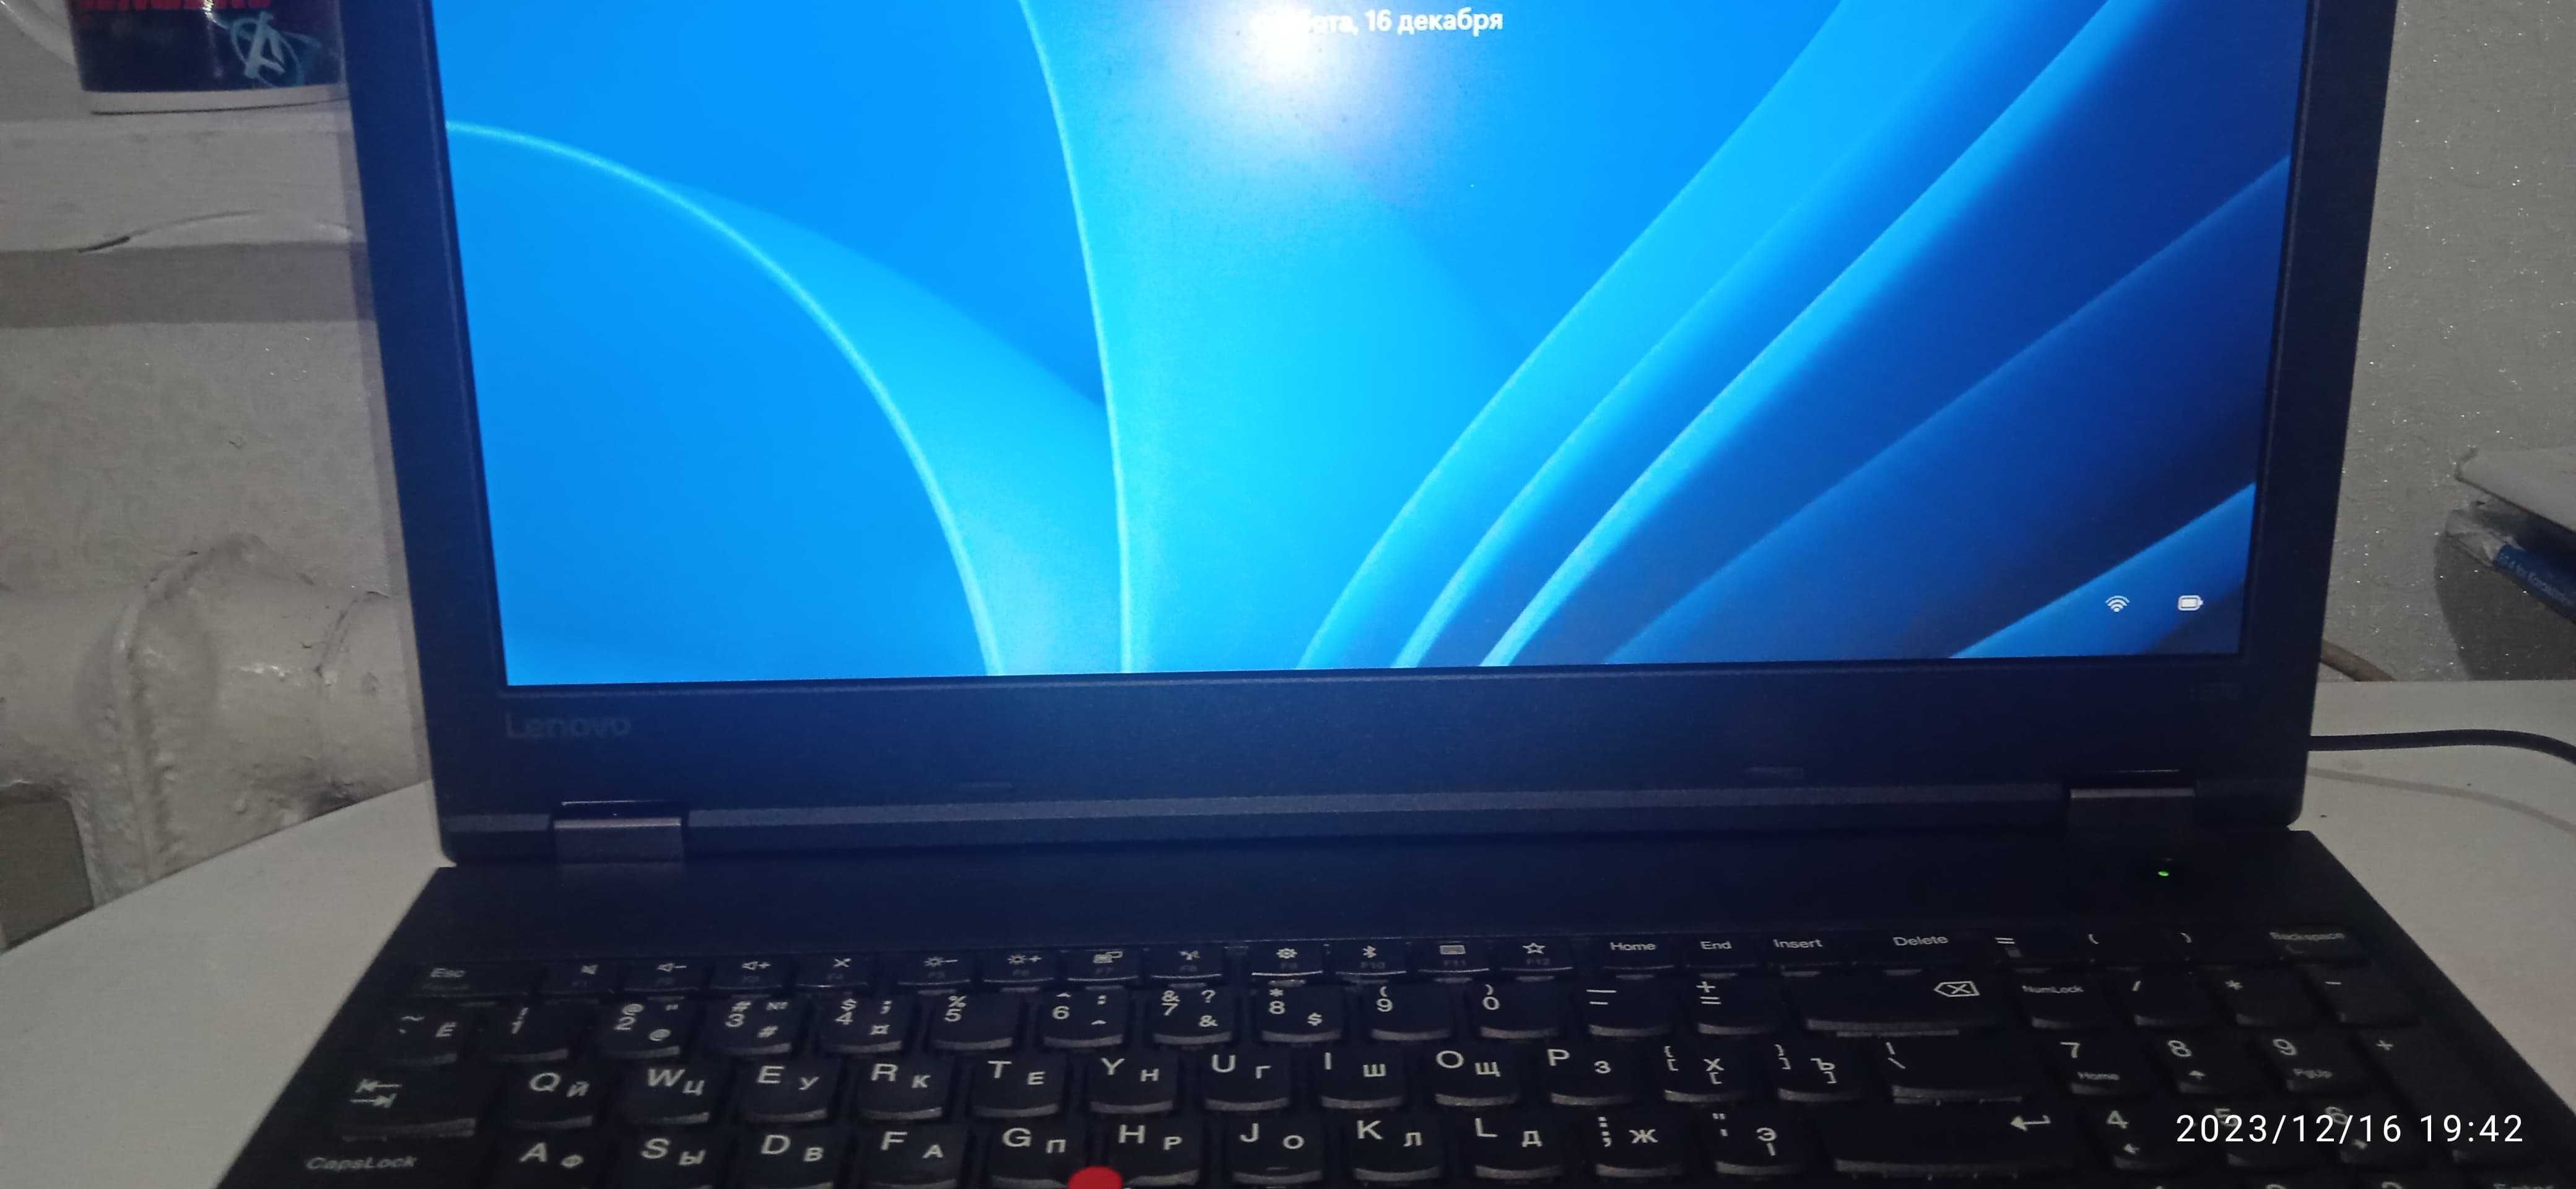 Ноутбук Thinkpad L570 работает хорошо не гудит не шумит